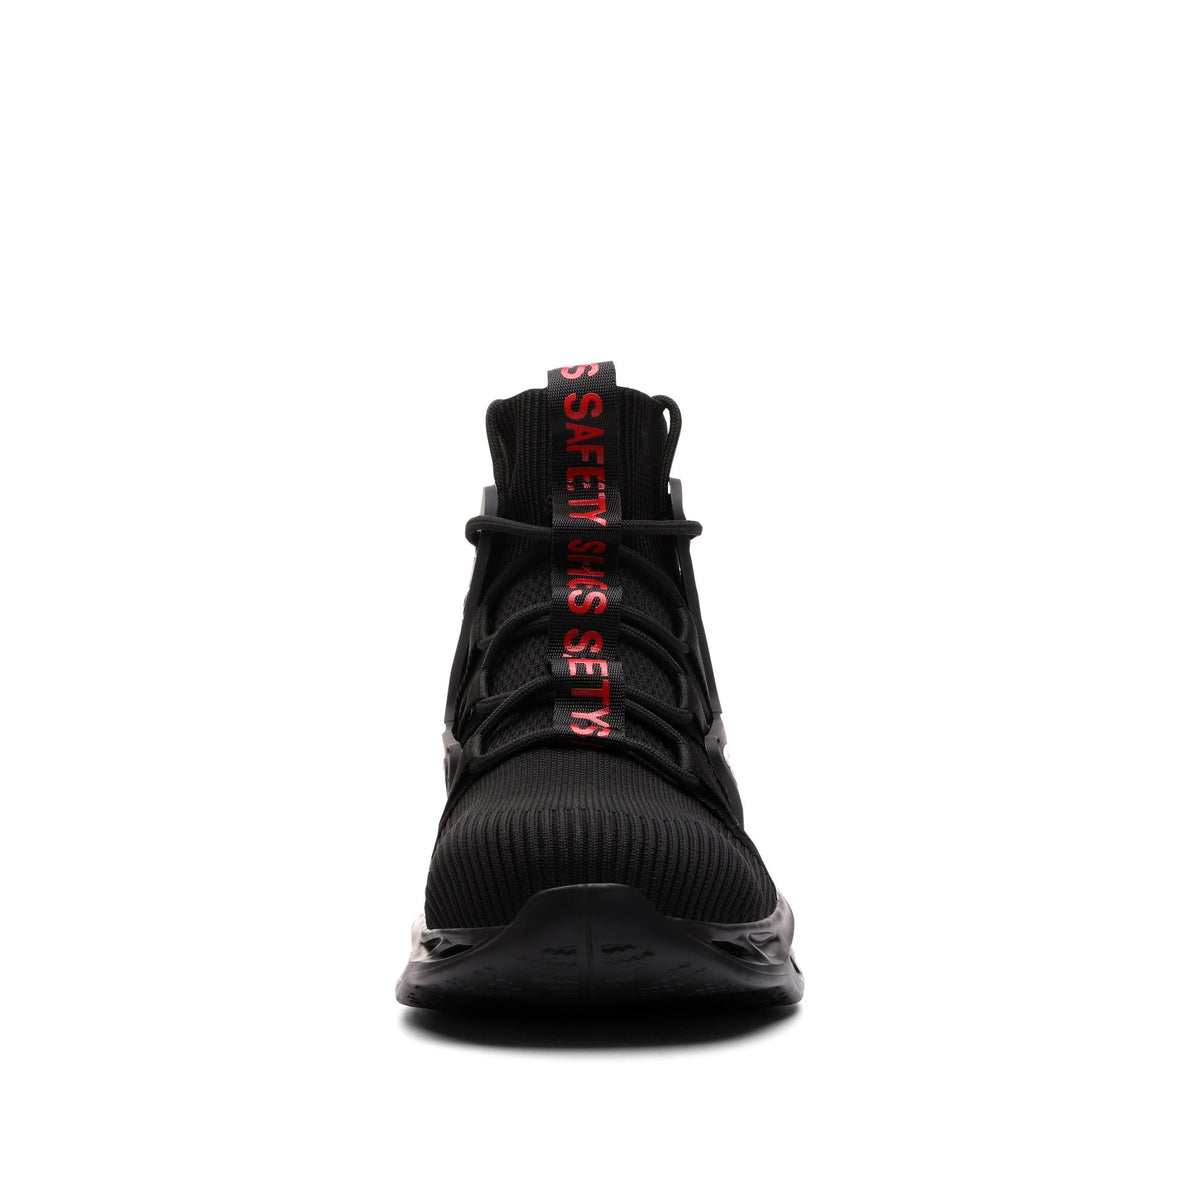 Ares Black - Indestructible Shoes